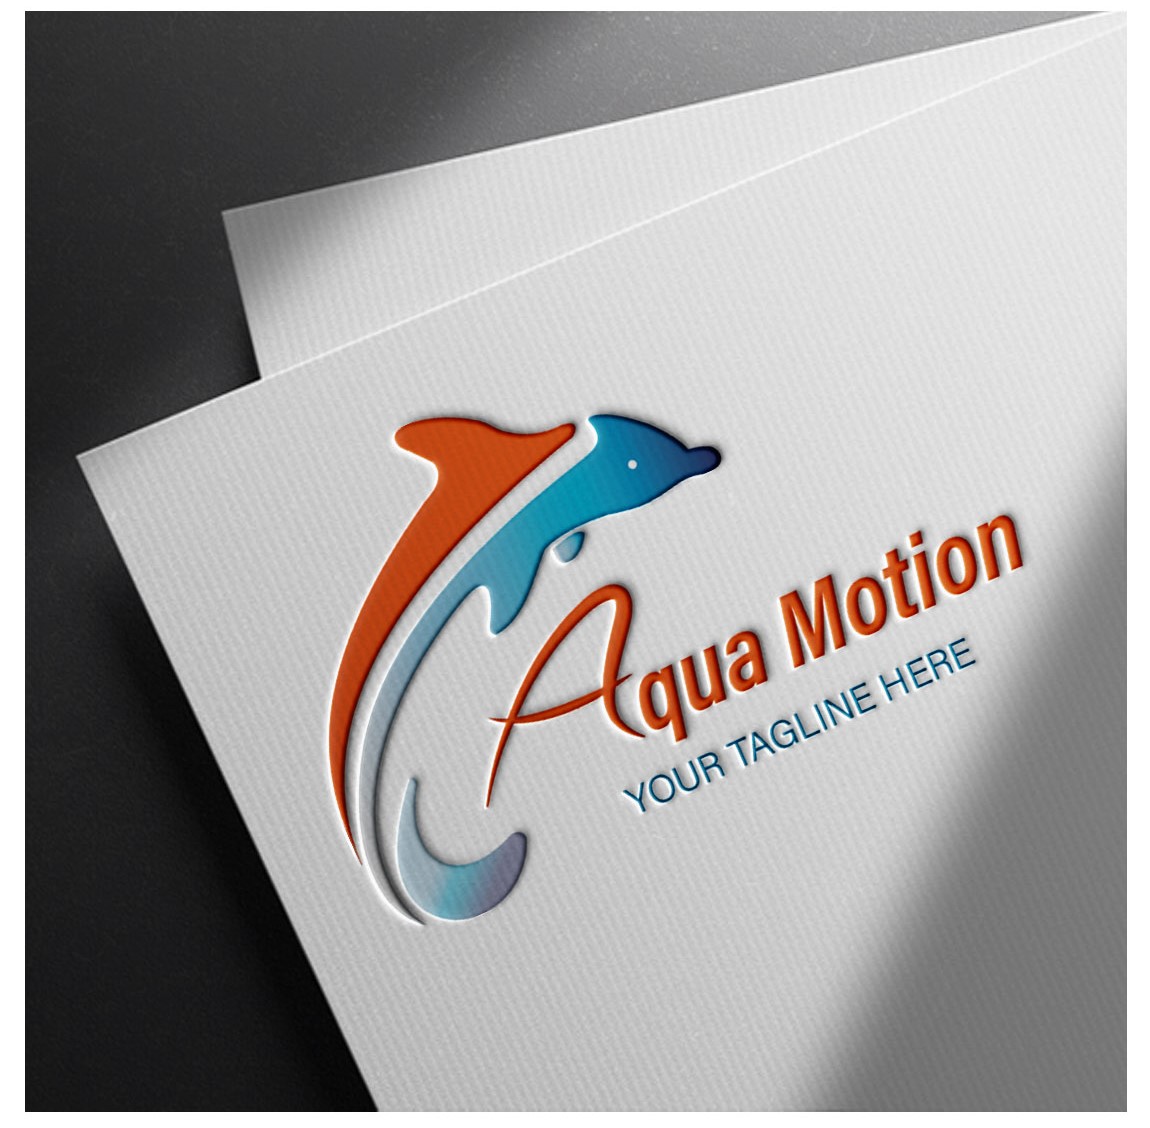 aquamotion logo presentation dl 2 217